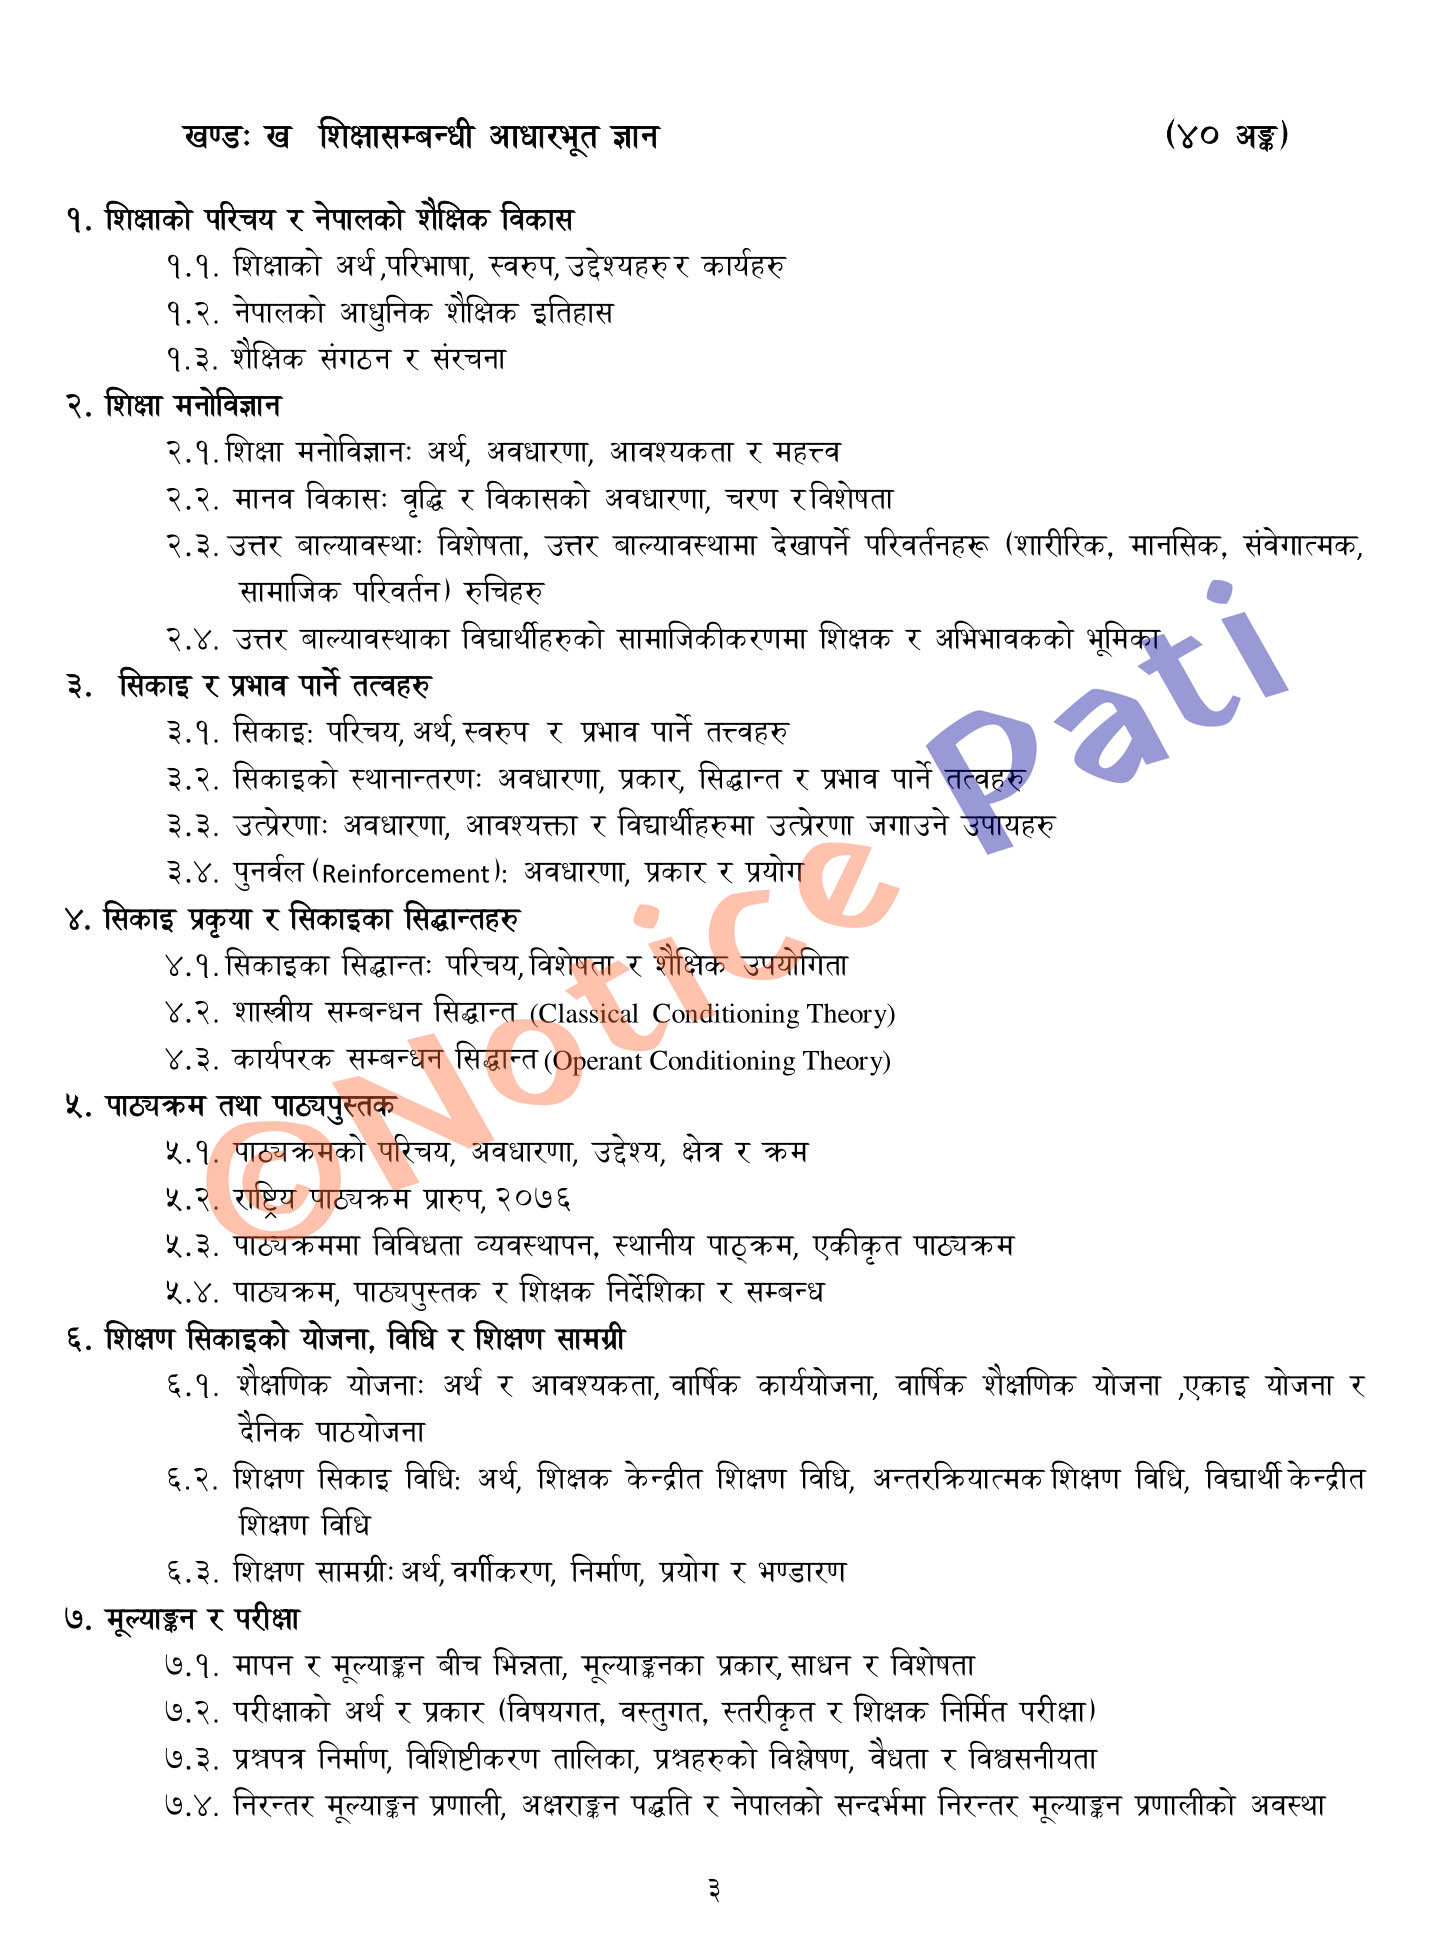 Teacher Service Commission (TSC) Primary level objective Questioon Exam syllabus. This Primary level Curriculum (प्राथमिक तहको पाठ्यक्रम) is published by Shikshak Sewa Aayog, Nepa.